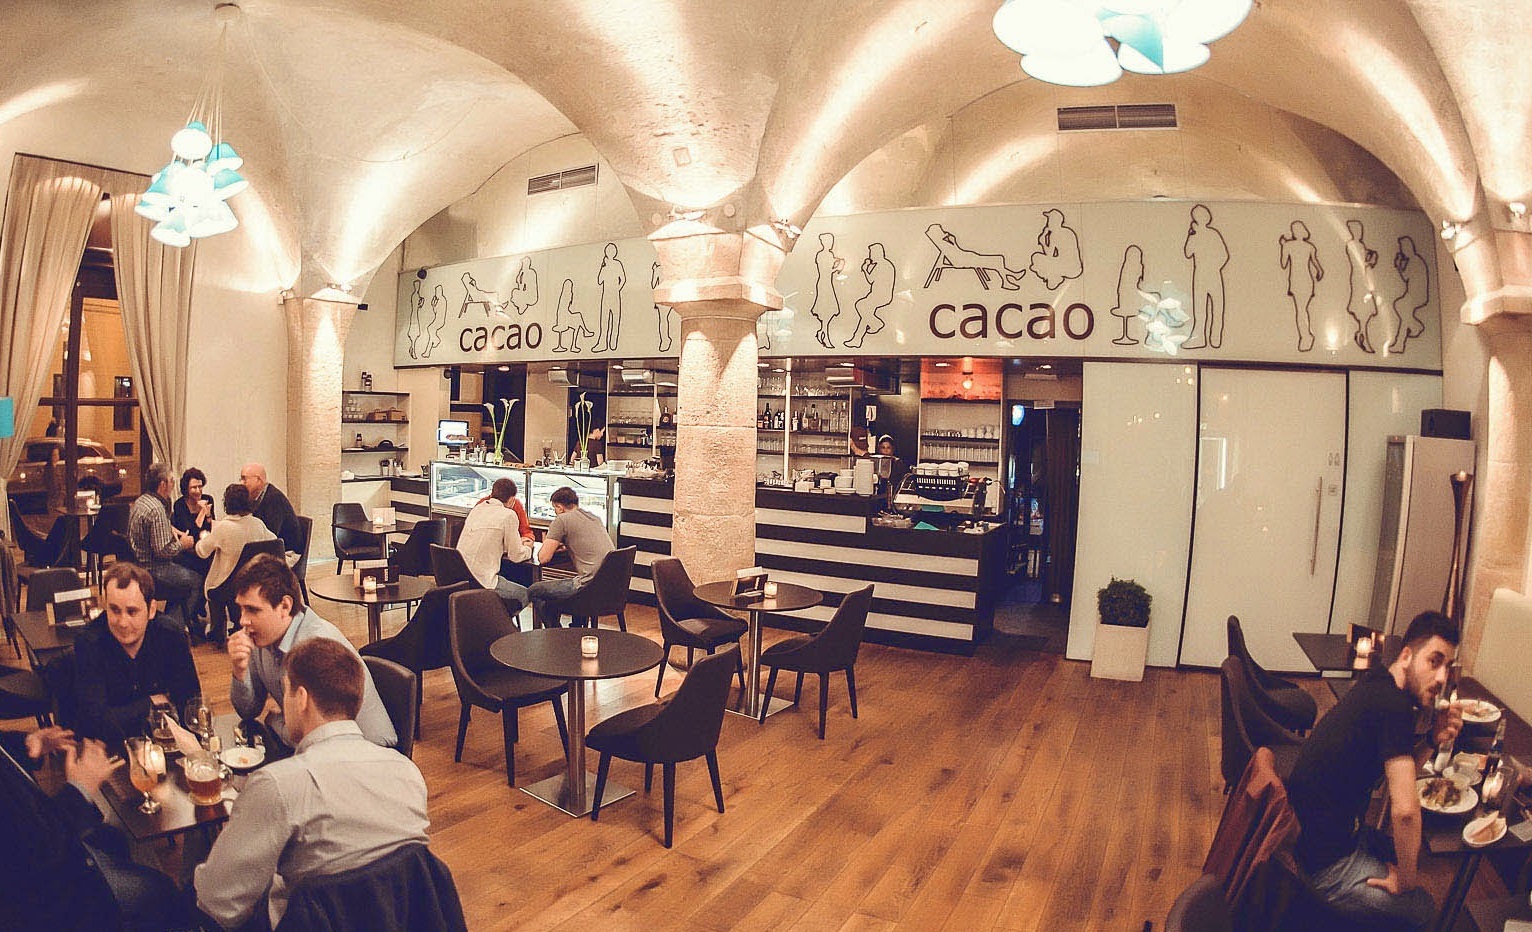 Cafe kacao reviews